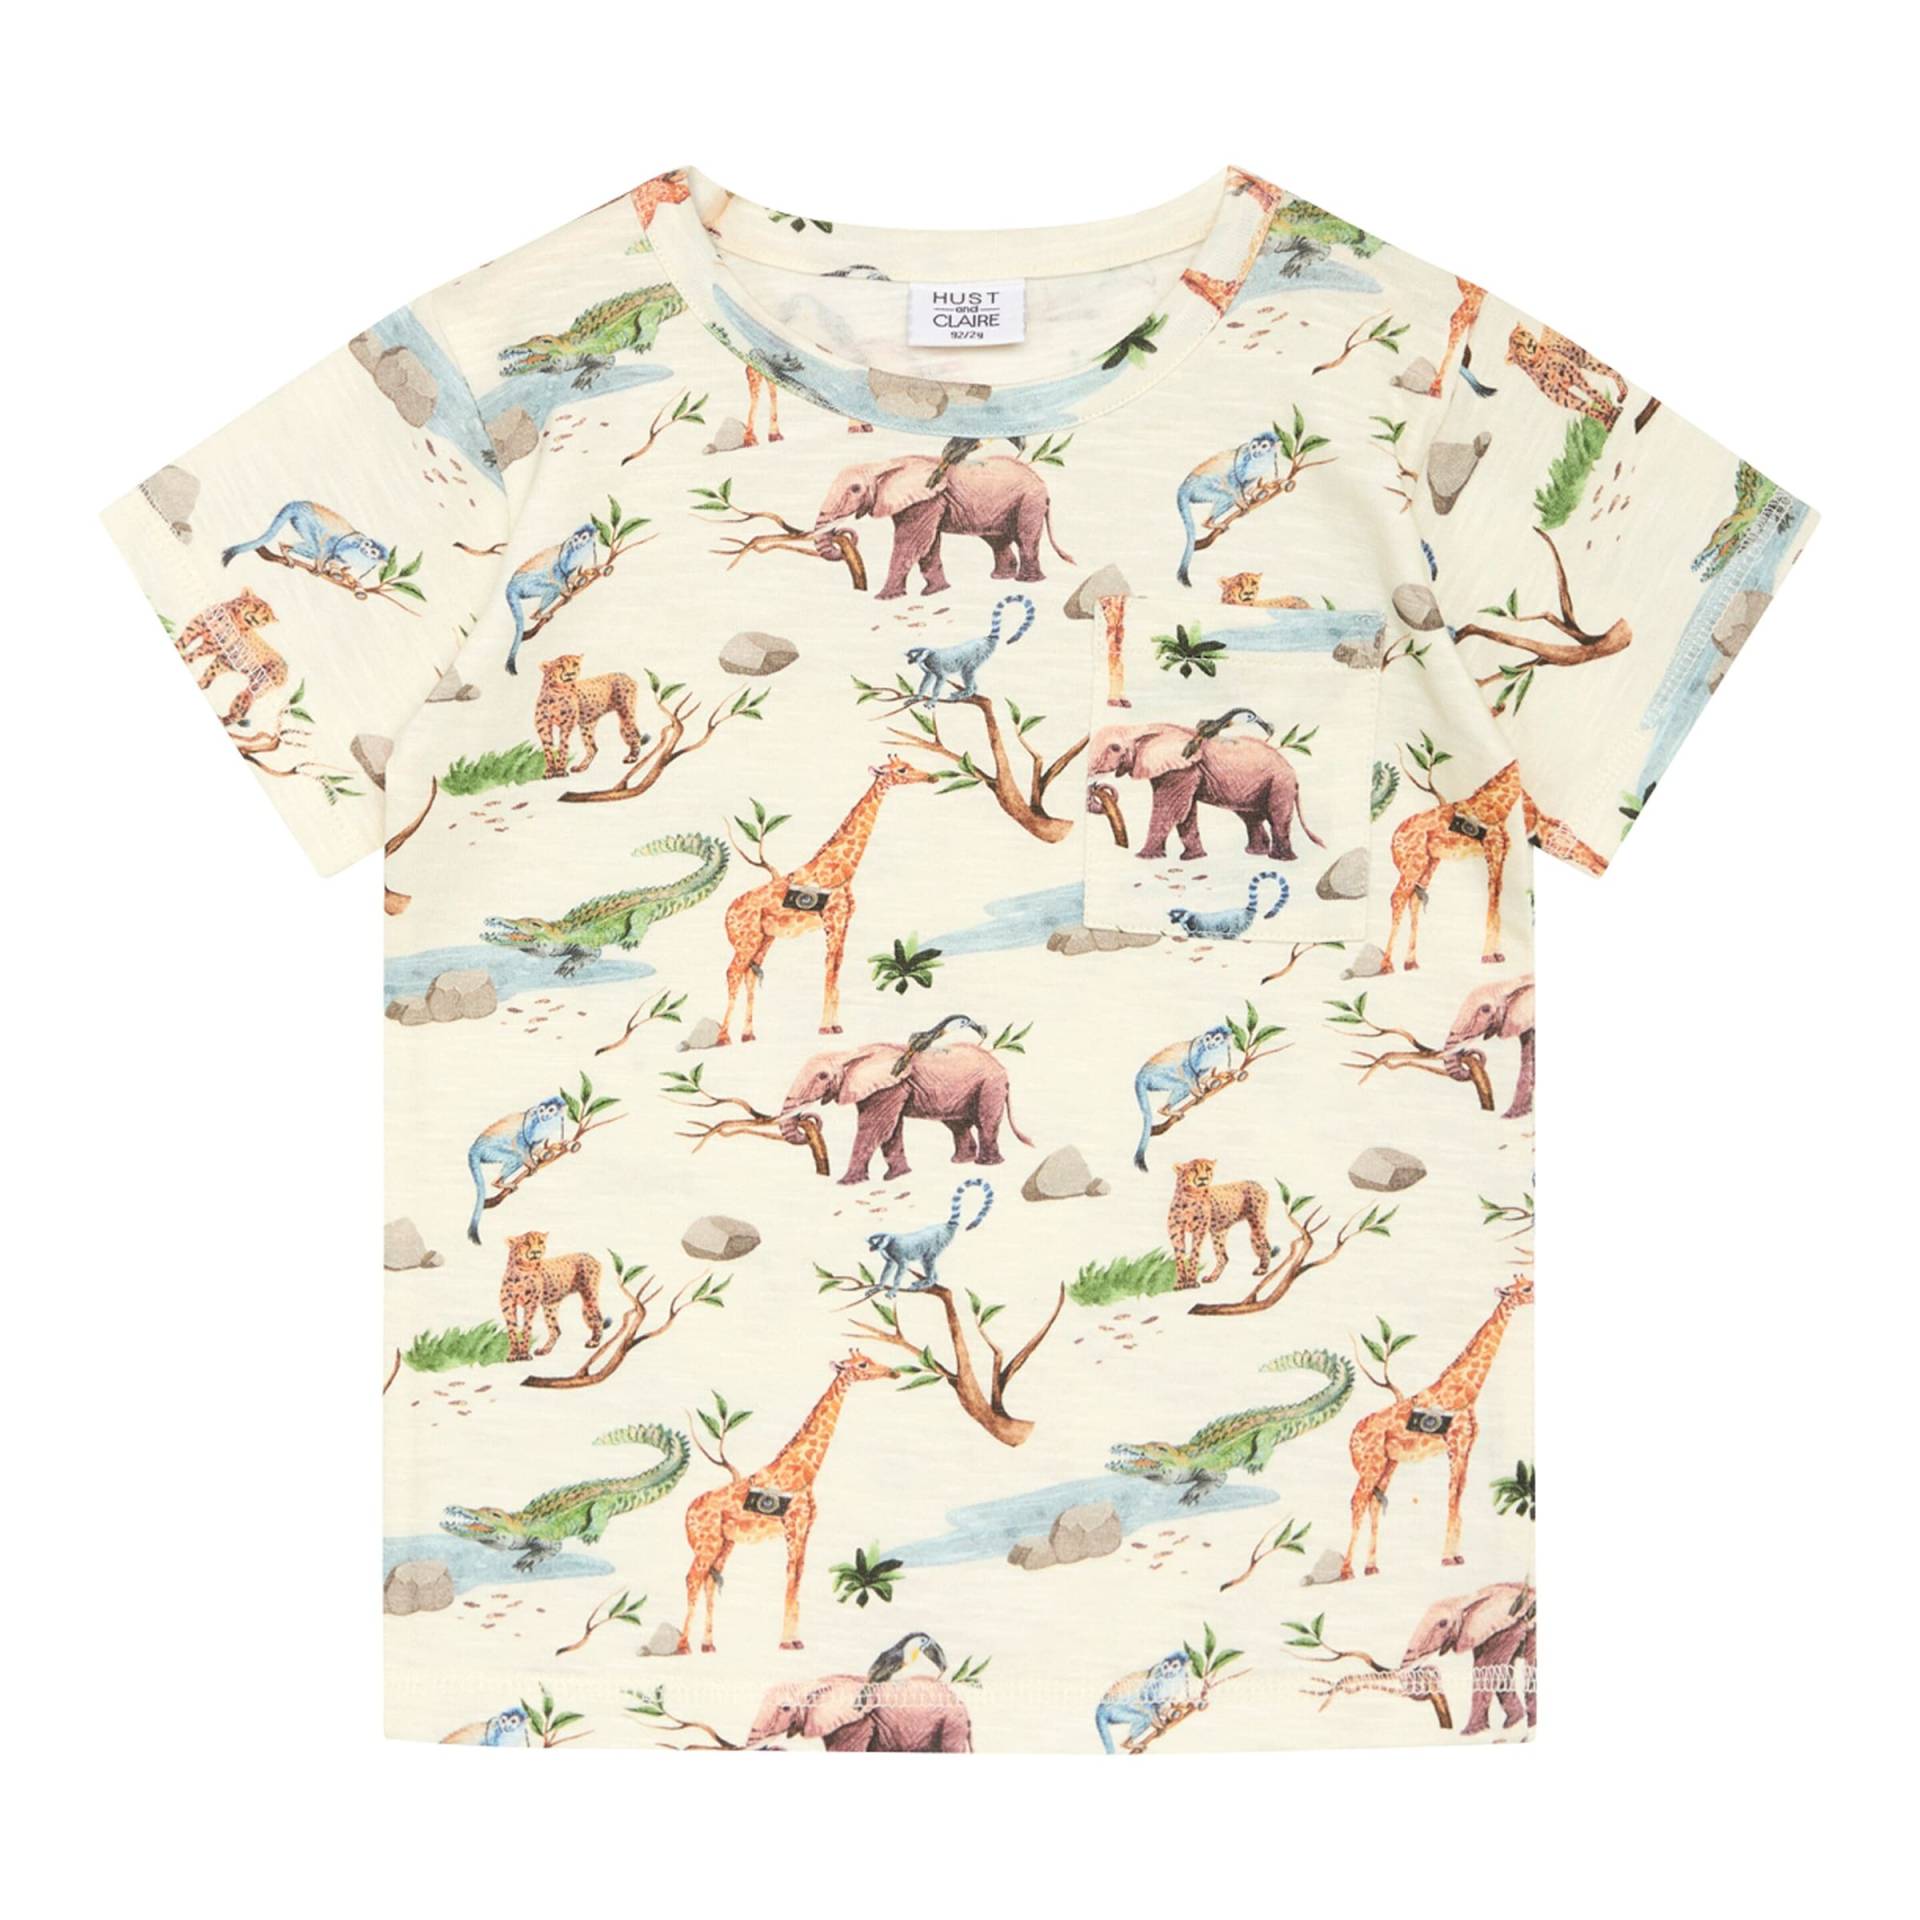 Hust&Claire T-Shirt Safari-Tiere von Hust&Claire